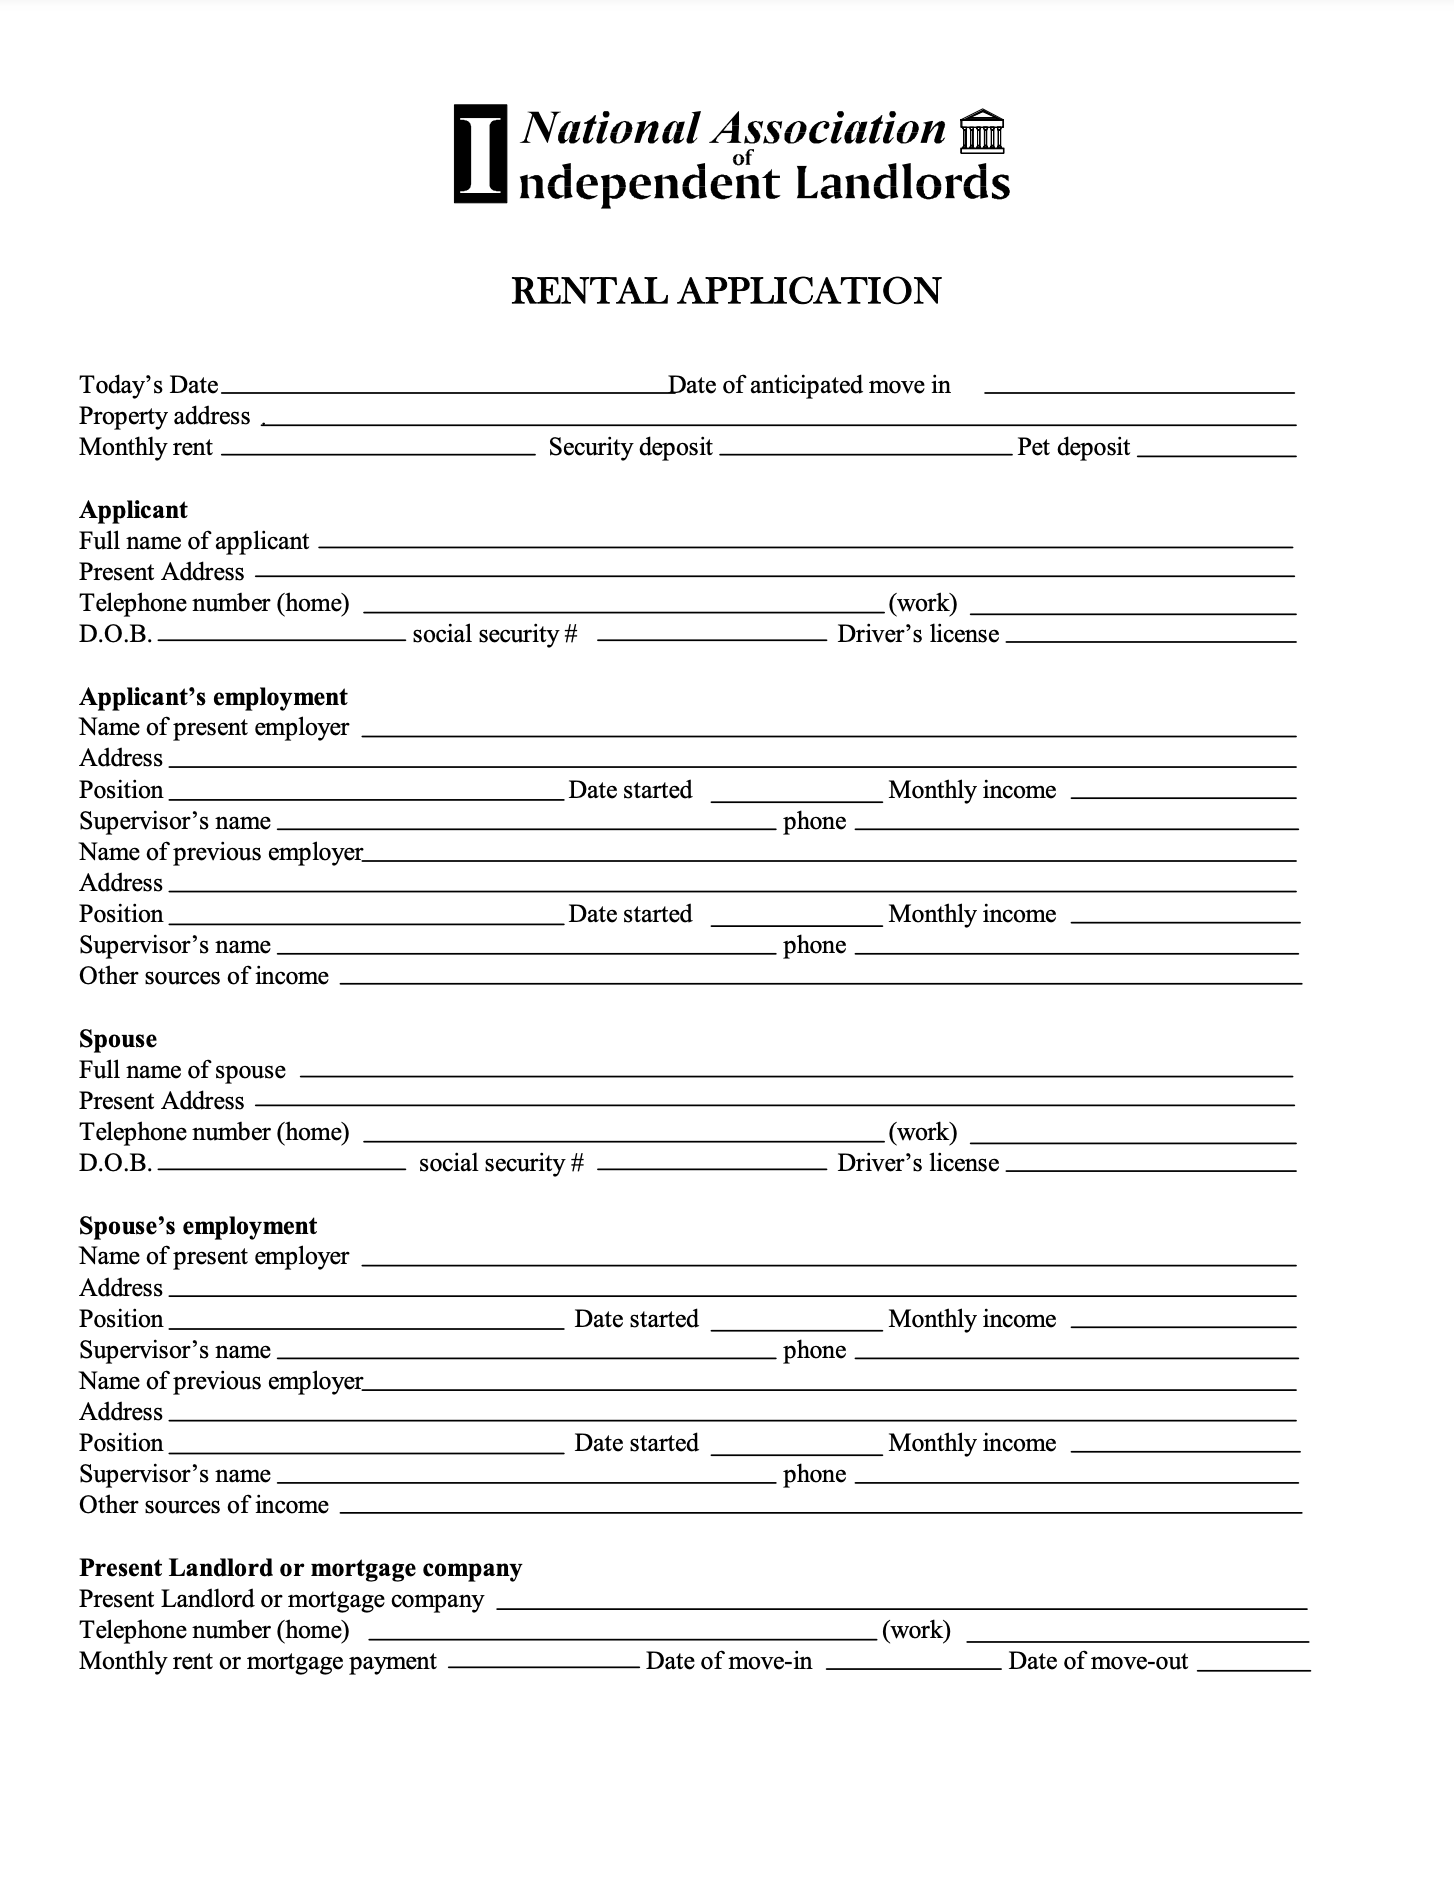 National Association of Independent Landlords Residential Application Form